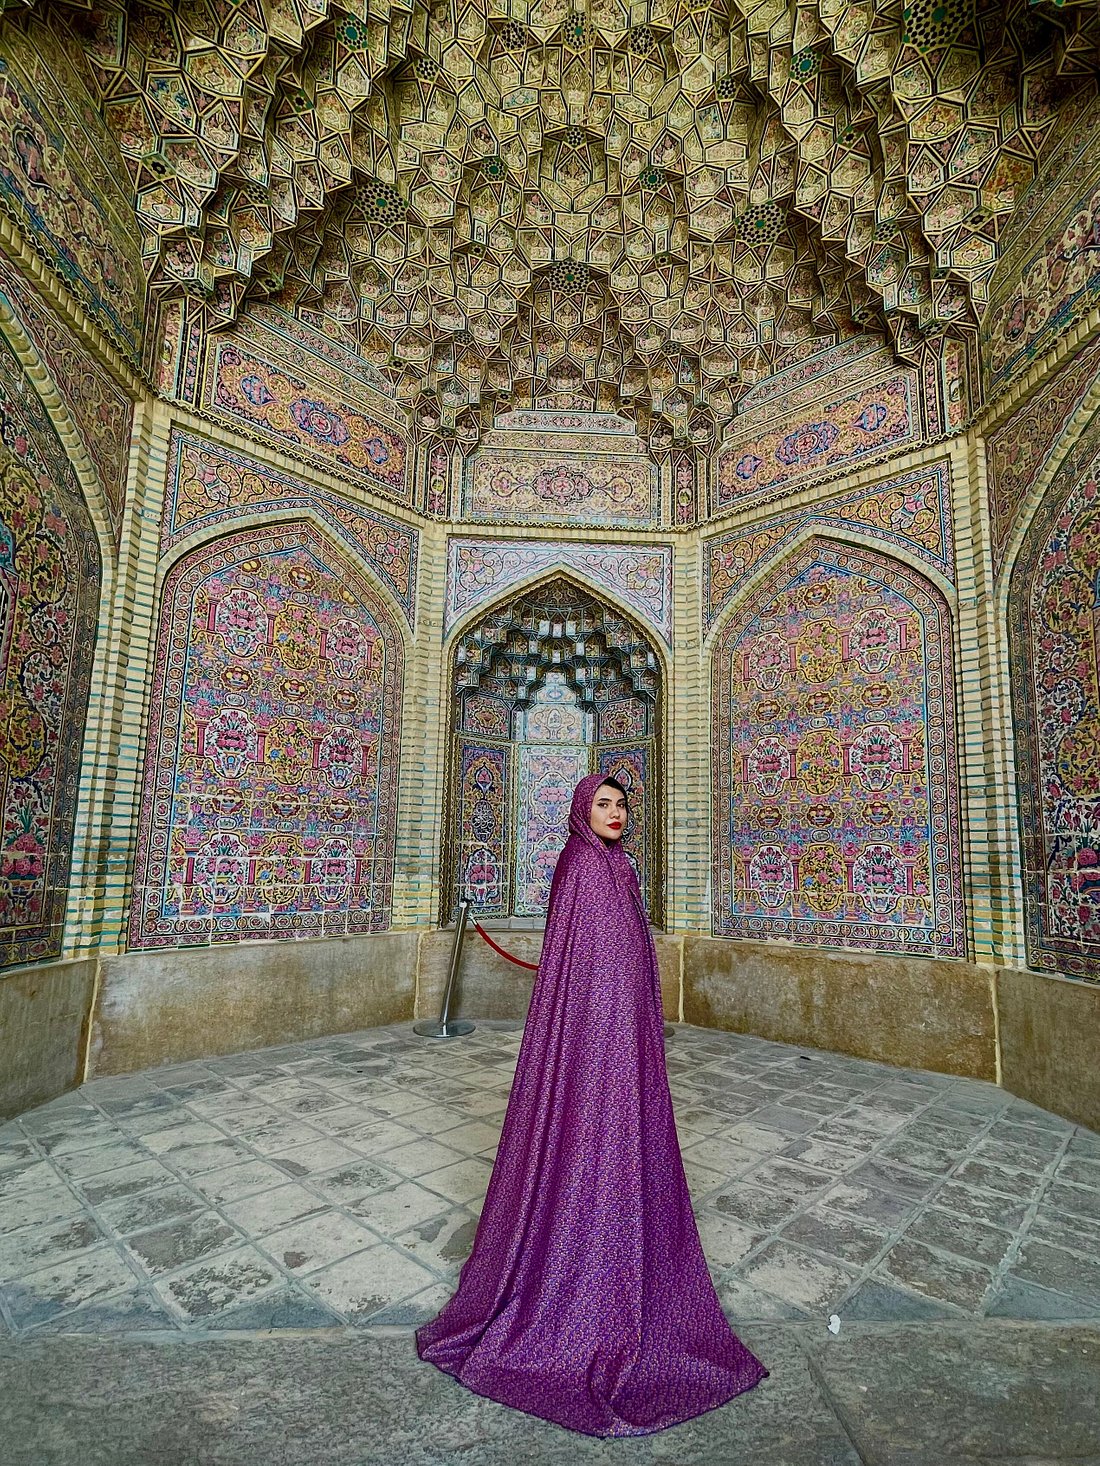 Nasir al-Mulk Mosque, Shiraz